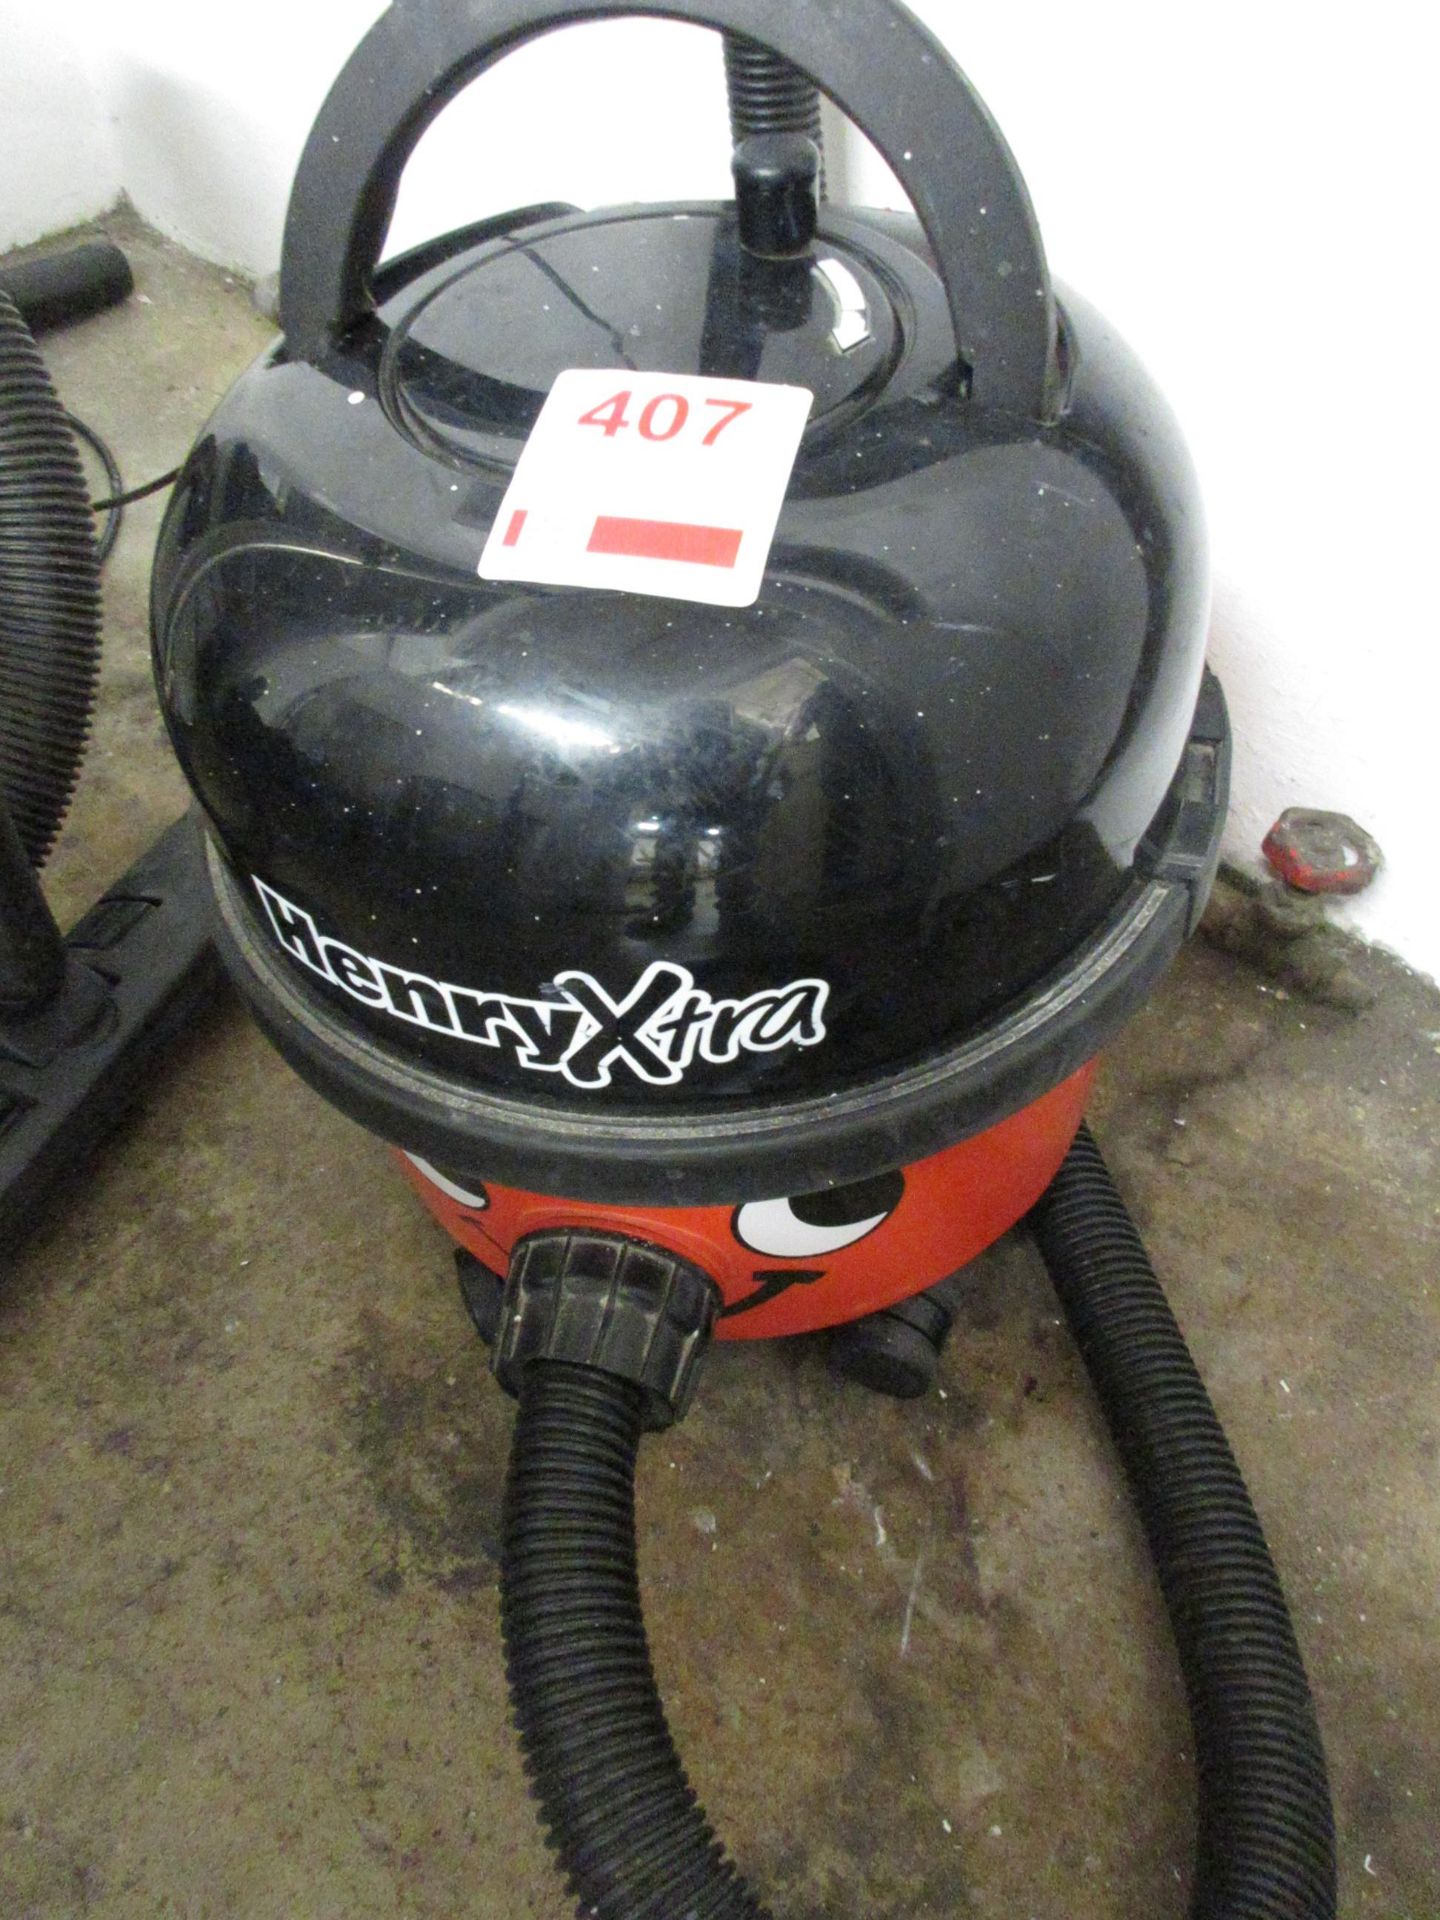 Henry Xtra HVX200-22 vacuum, 240v - Image 2 of 3